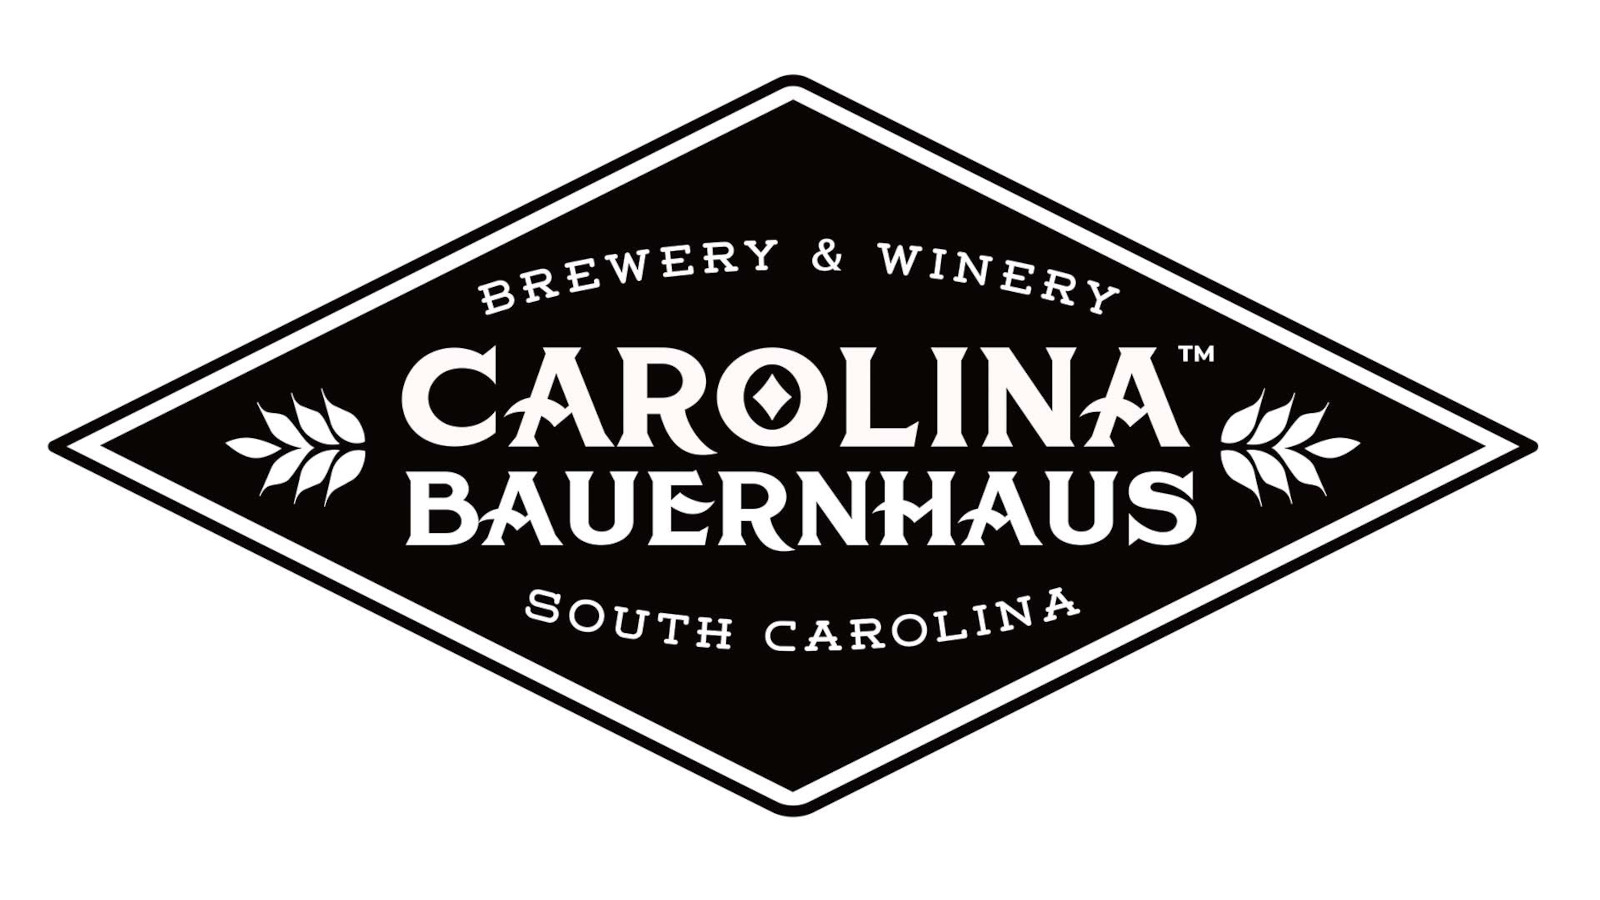 Carolina Bauernhaus Brewery & Winery $100 Gift Card US, 56.5 usd